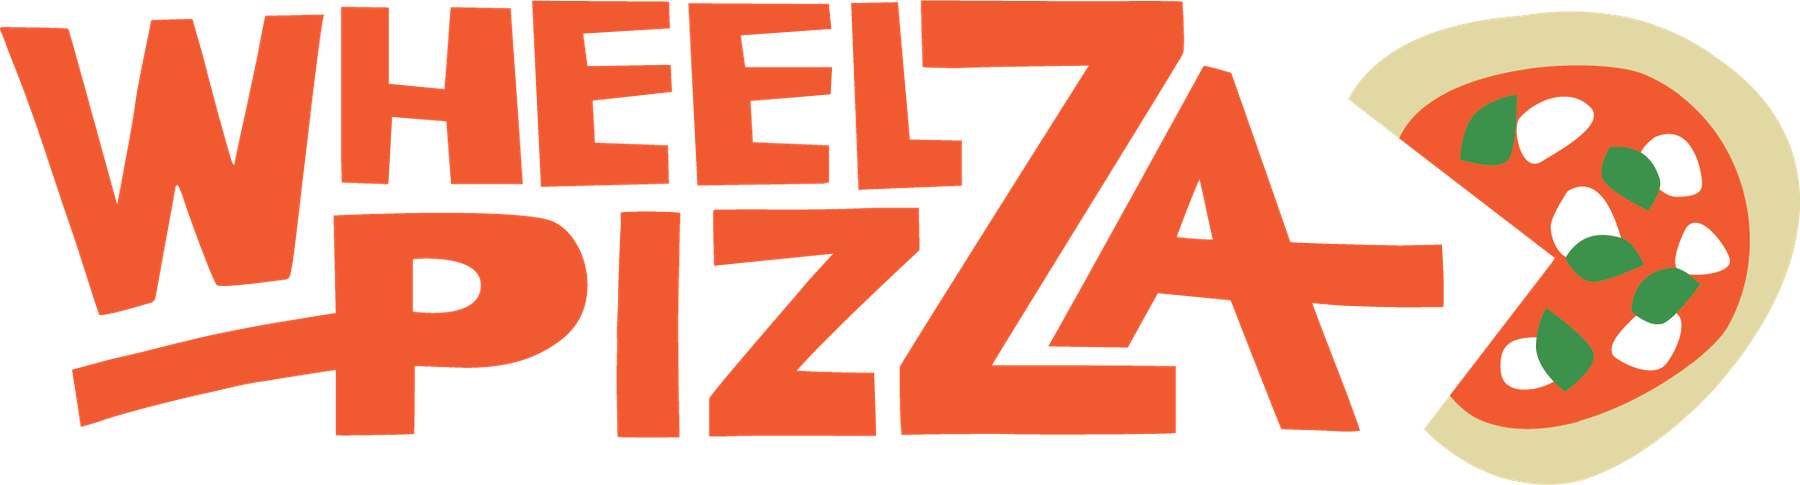 Wheelz Pizza Leland logo top